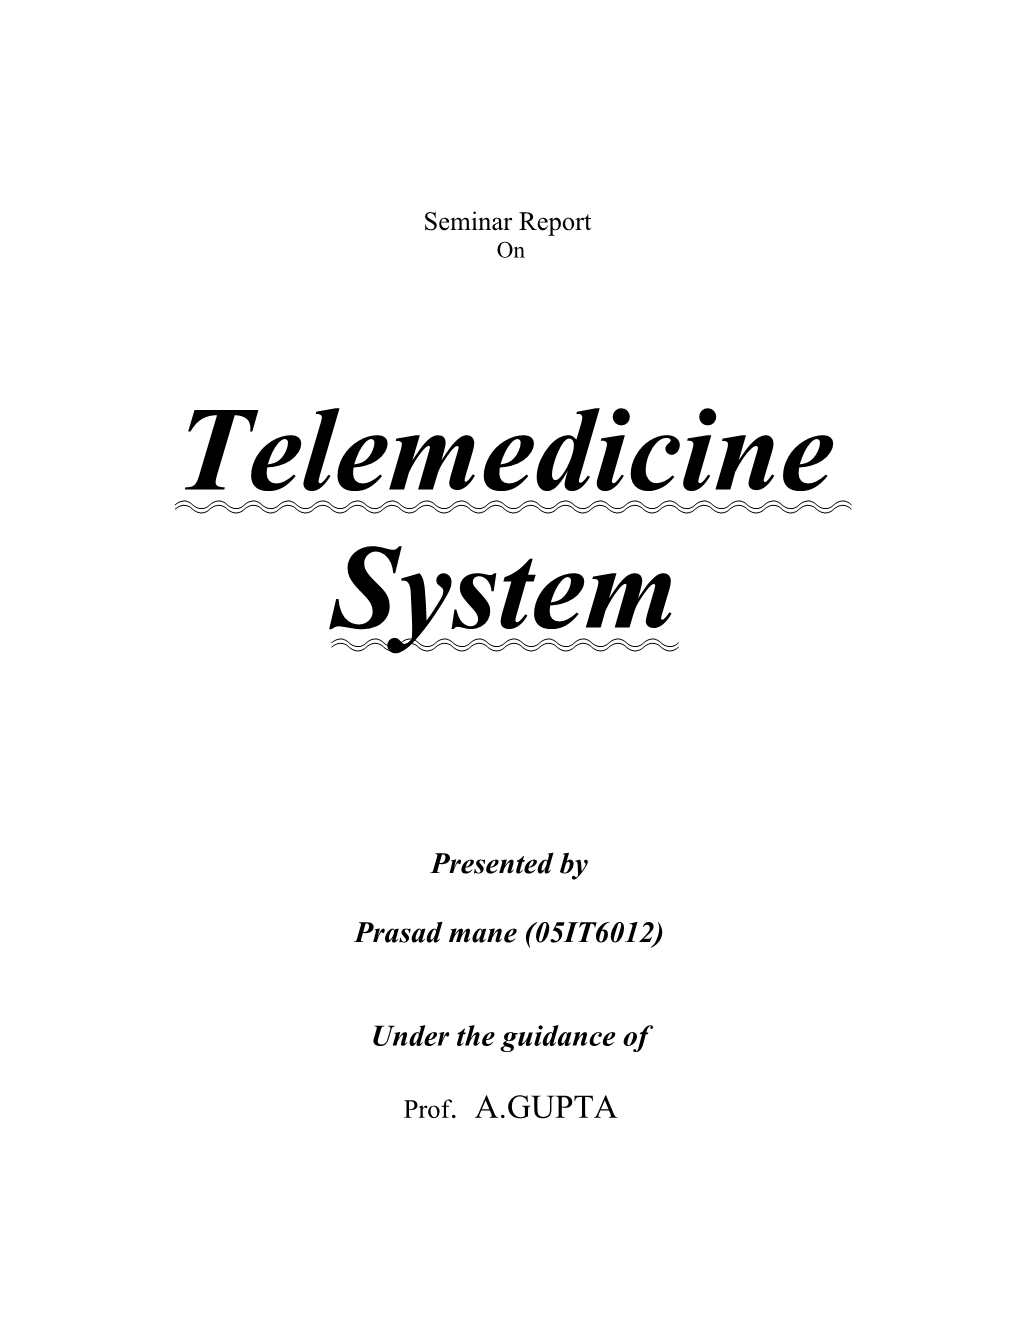 Telemedicine Systems